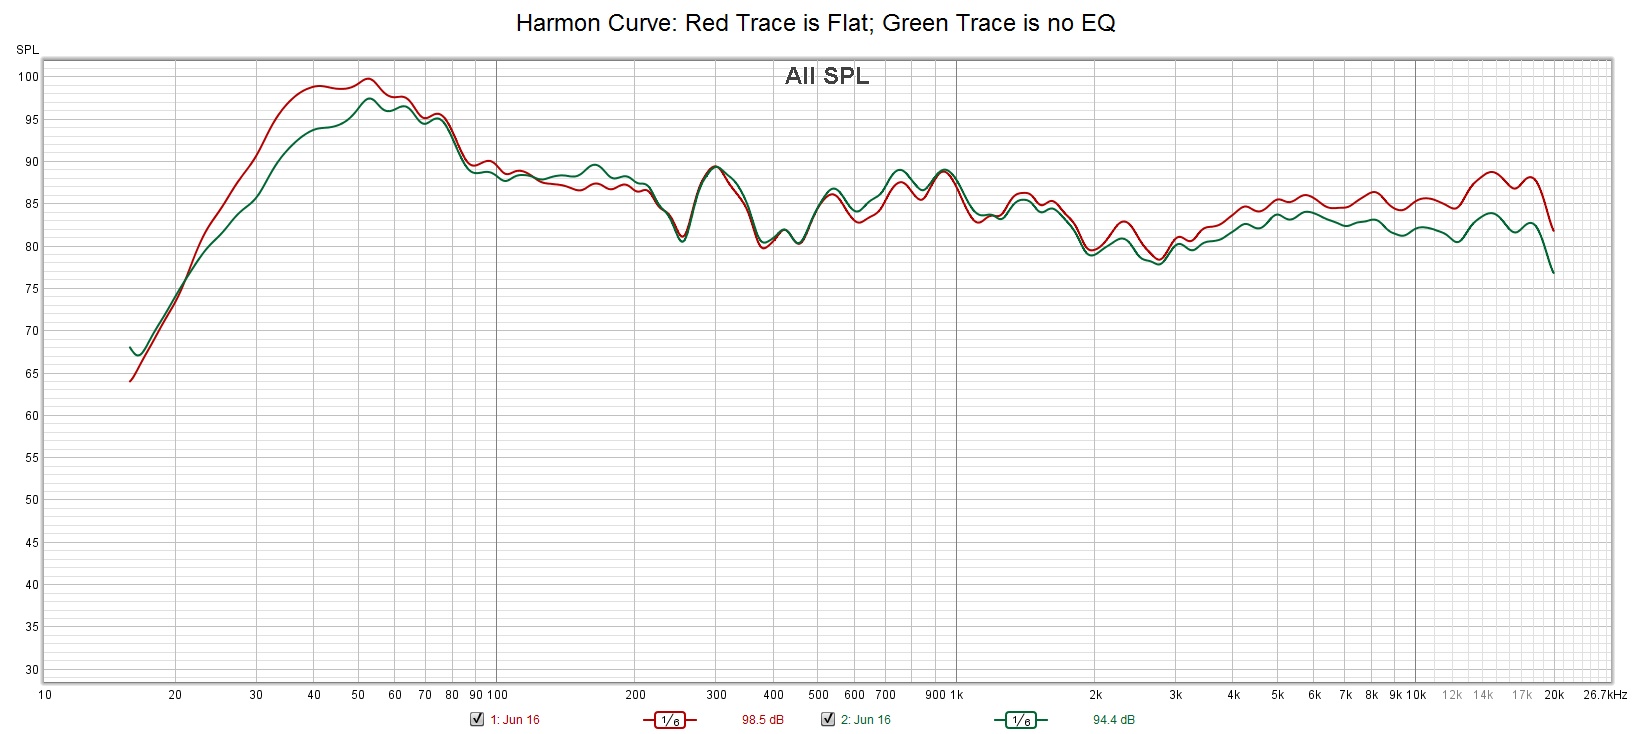 Harmon_Curves_Flat_No_EQ.jpg